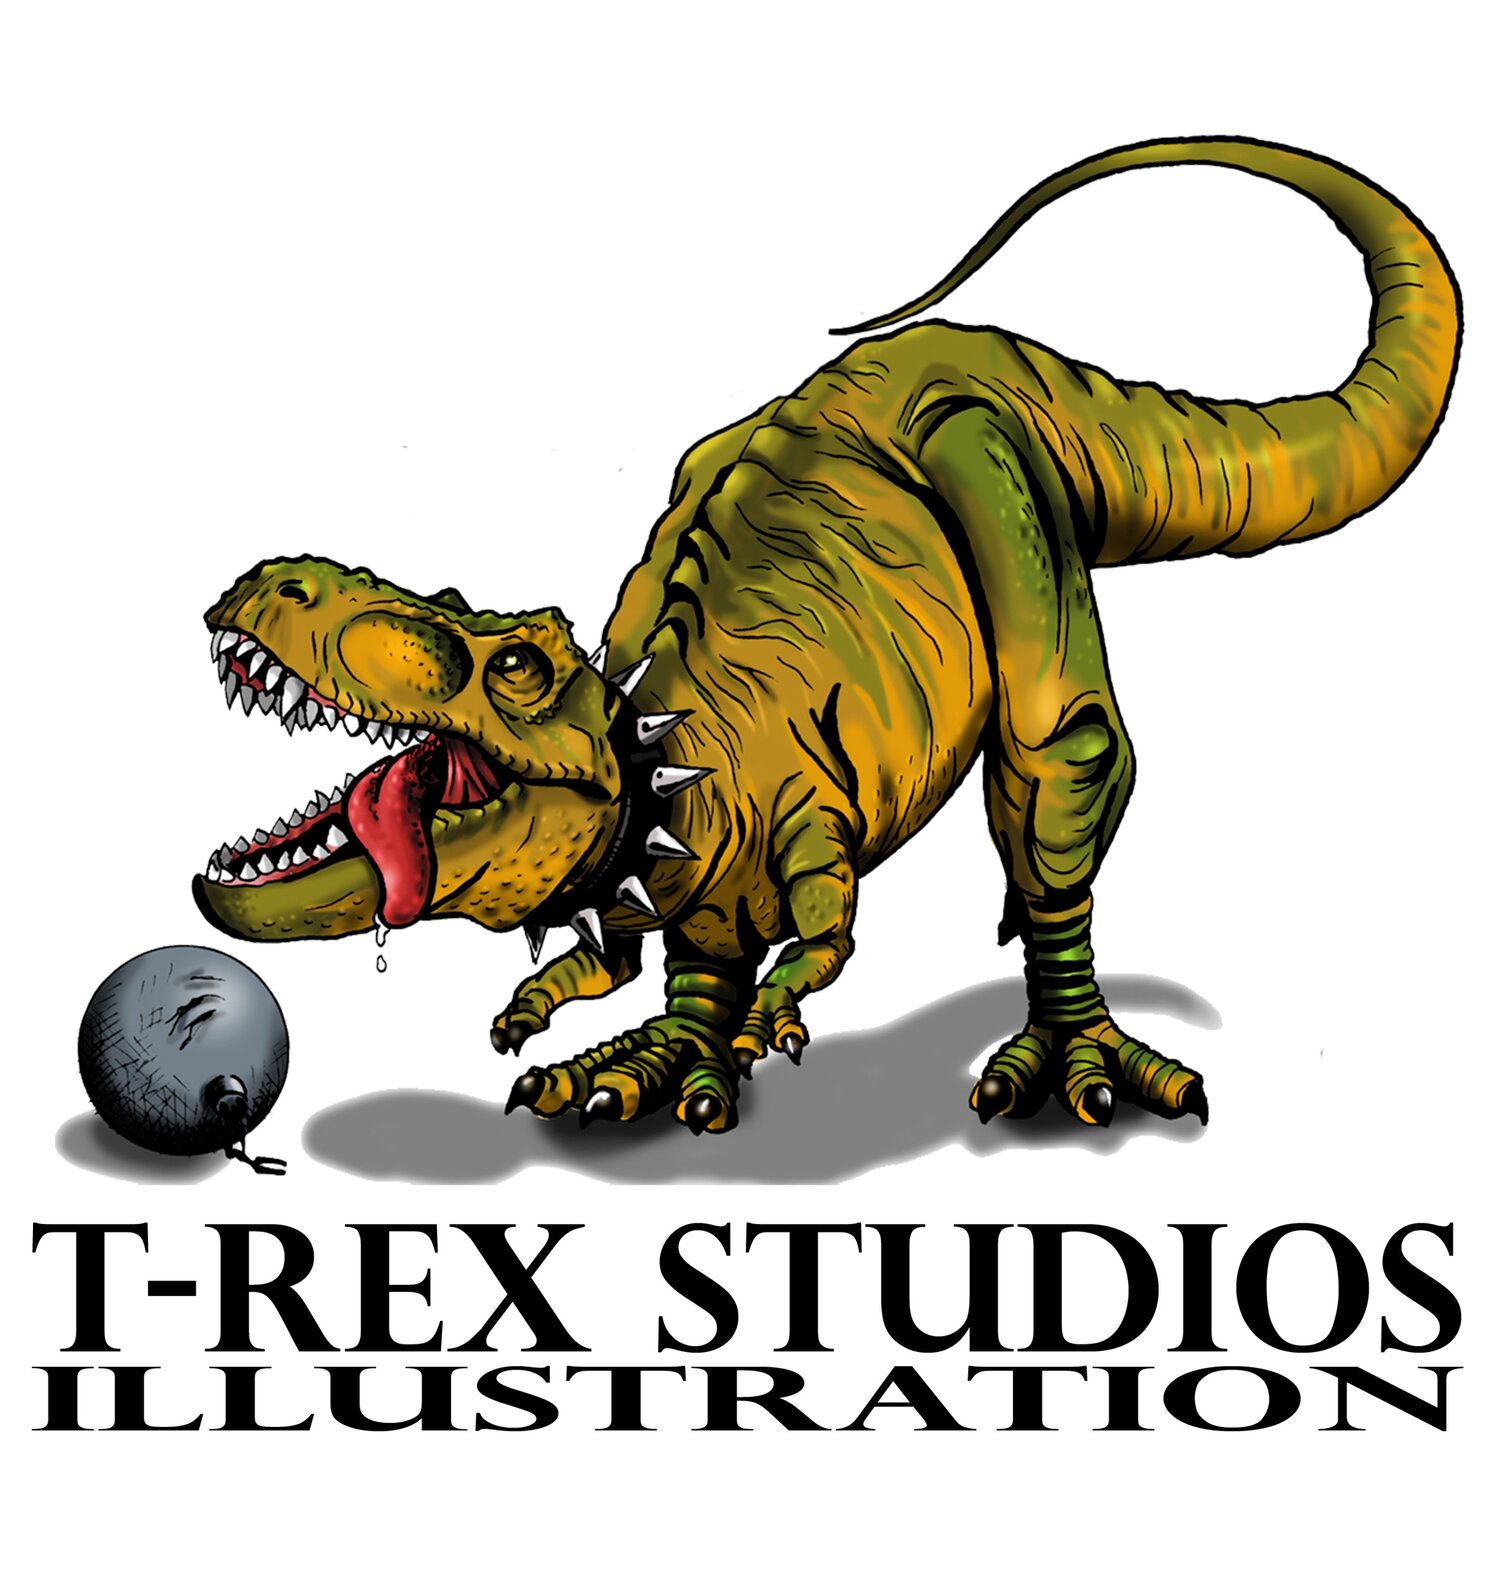 T rex studio. Жабиус рекс. T-Rex, Lune студия. Рекс синфелд.